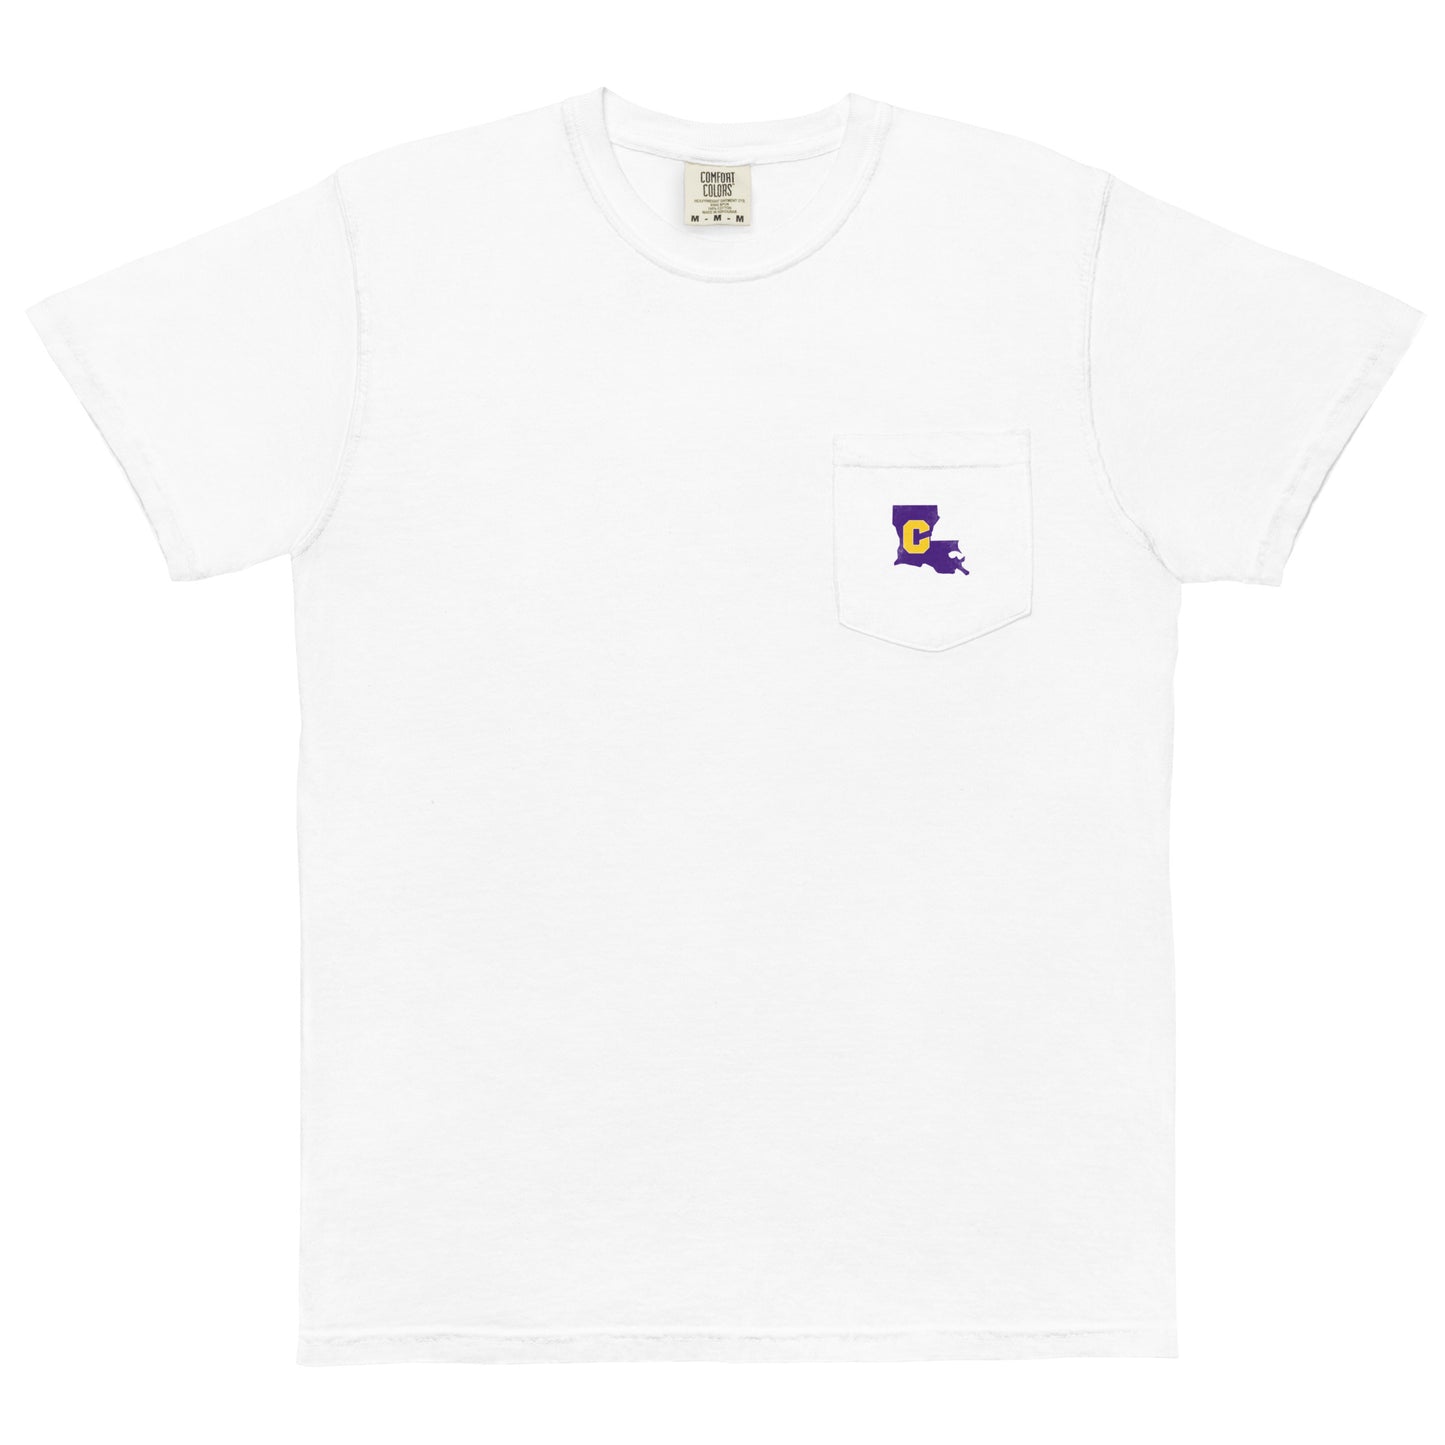 The Dream Team Unisex garment-dyed pocket t-shirt